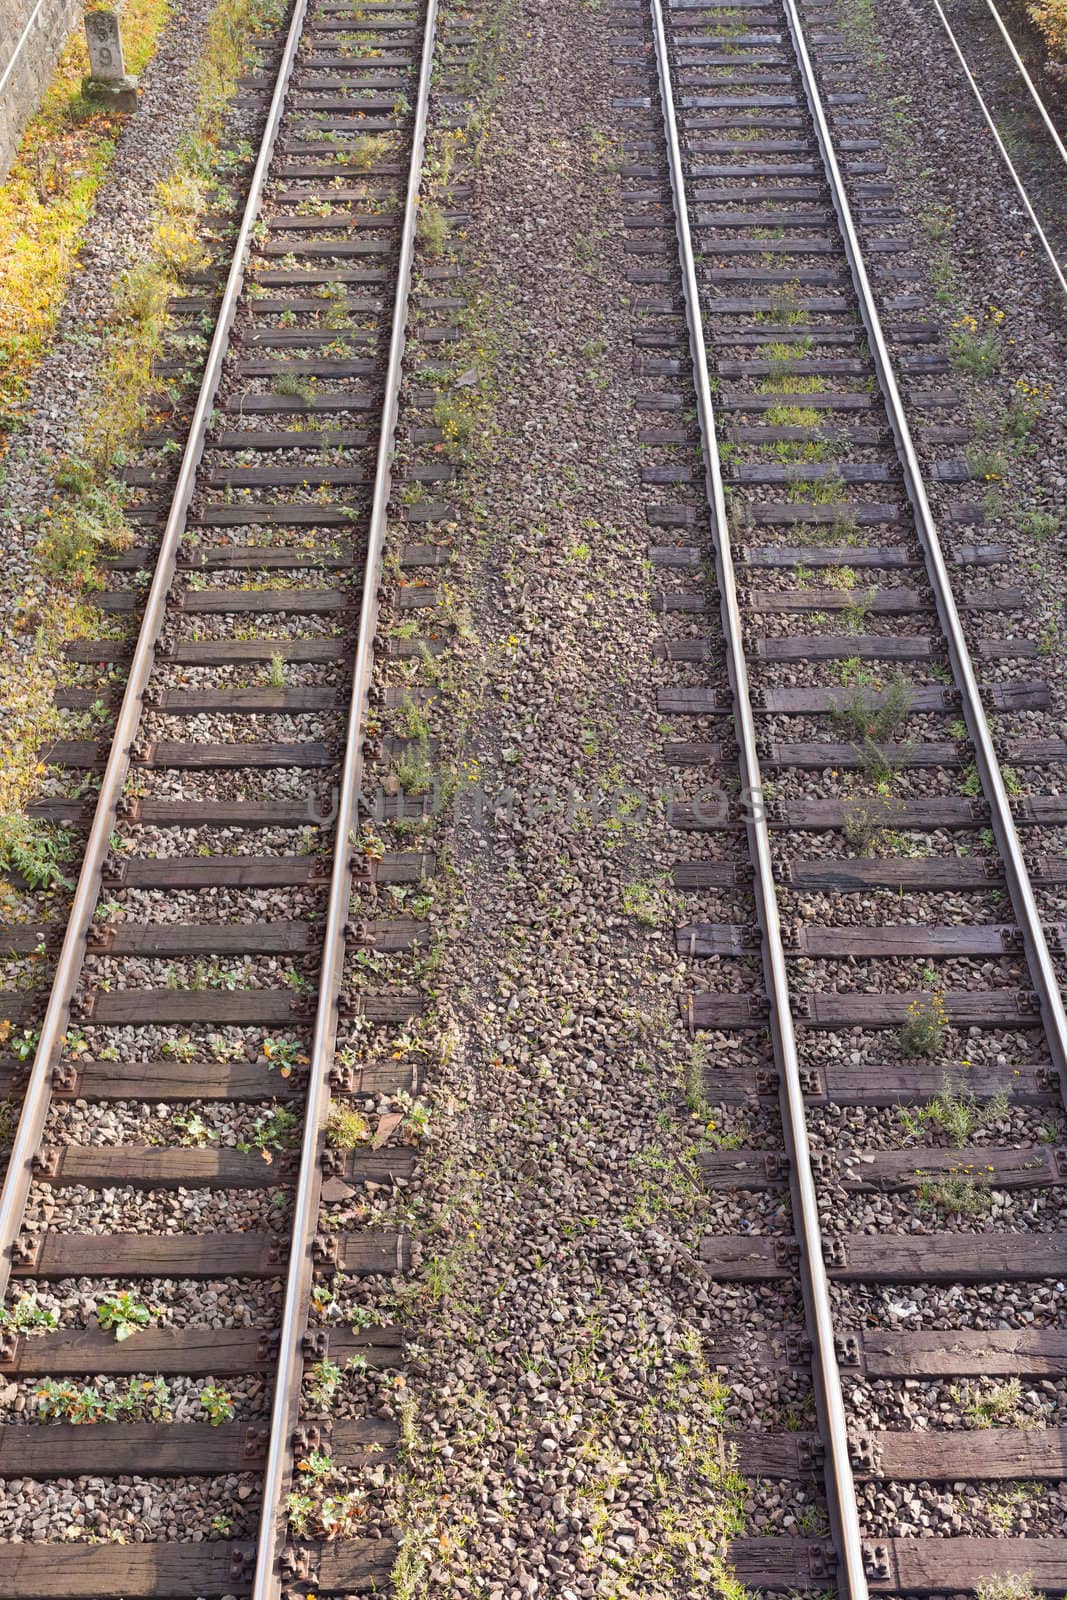 Two parallel railway tracks in embankment of gravel.